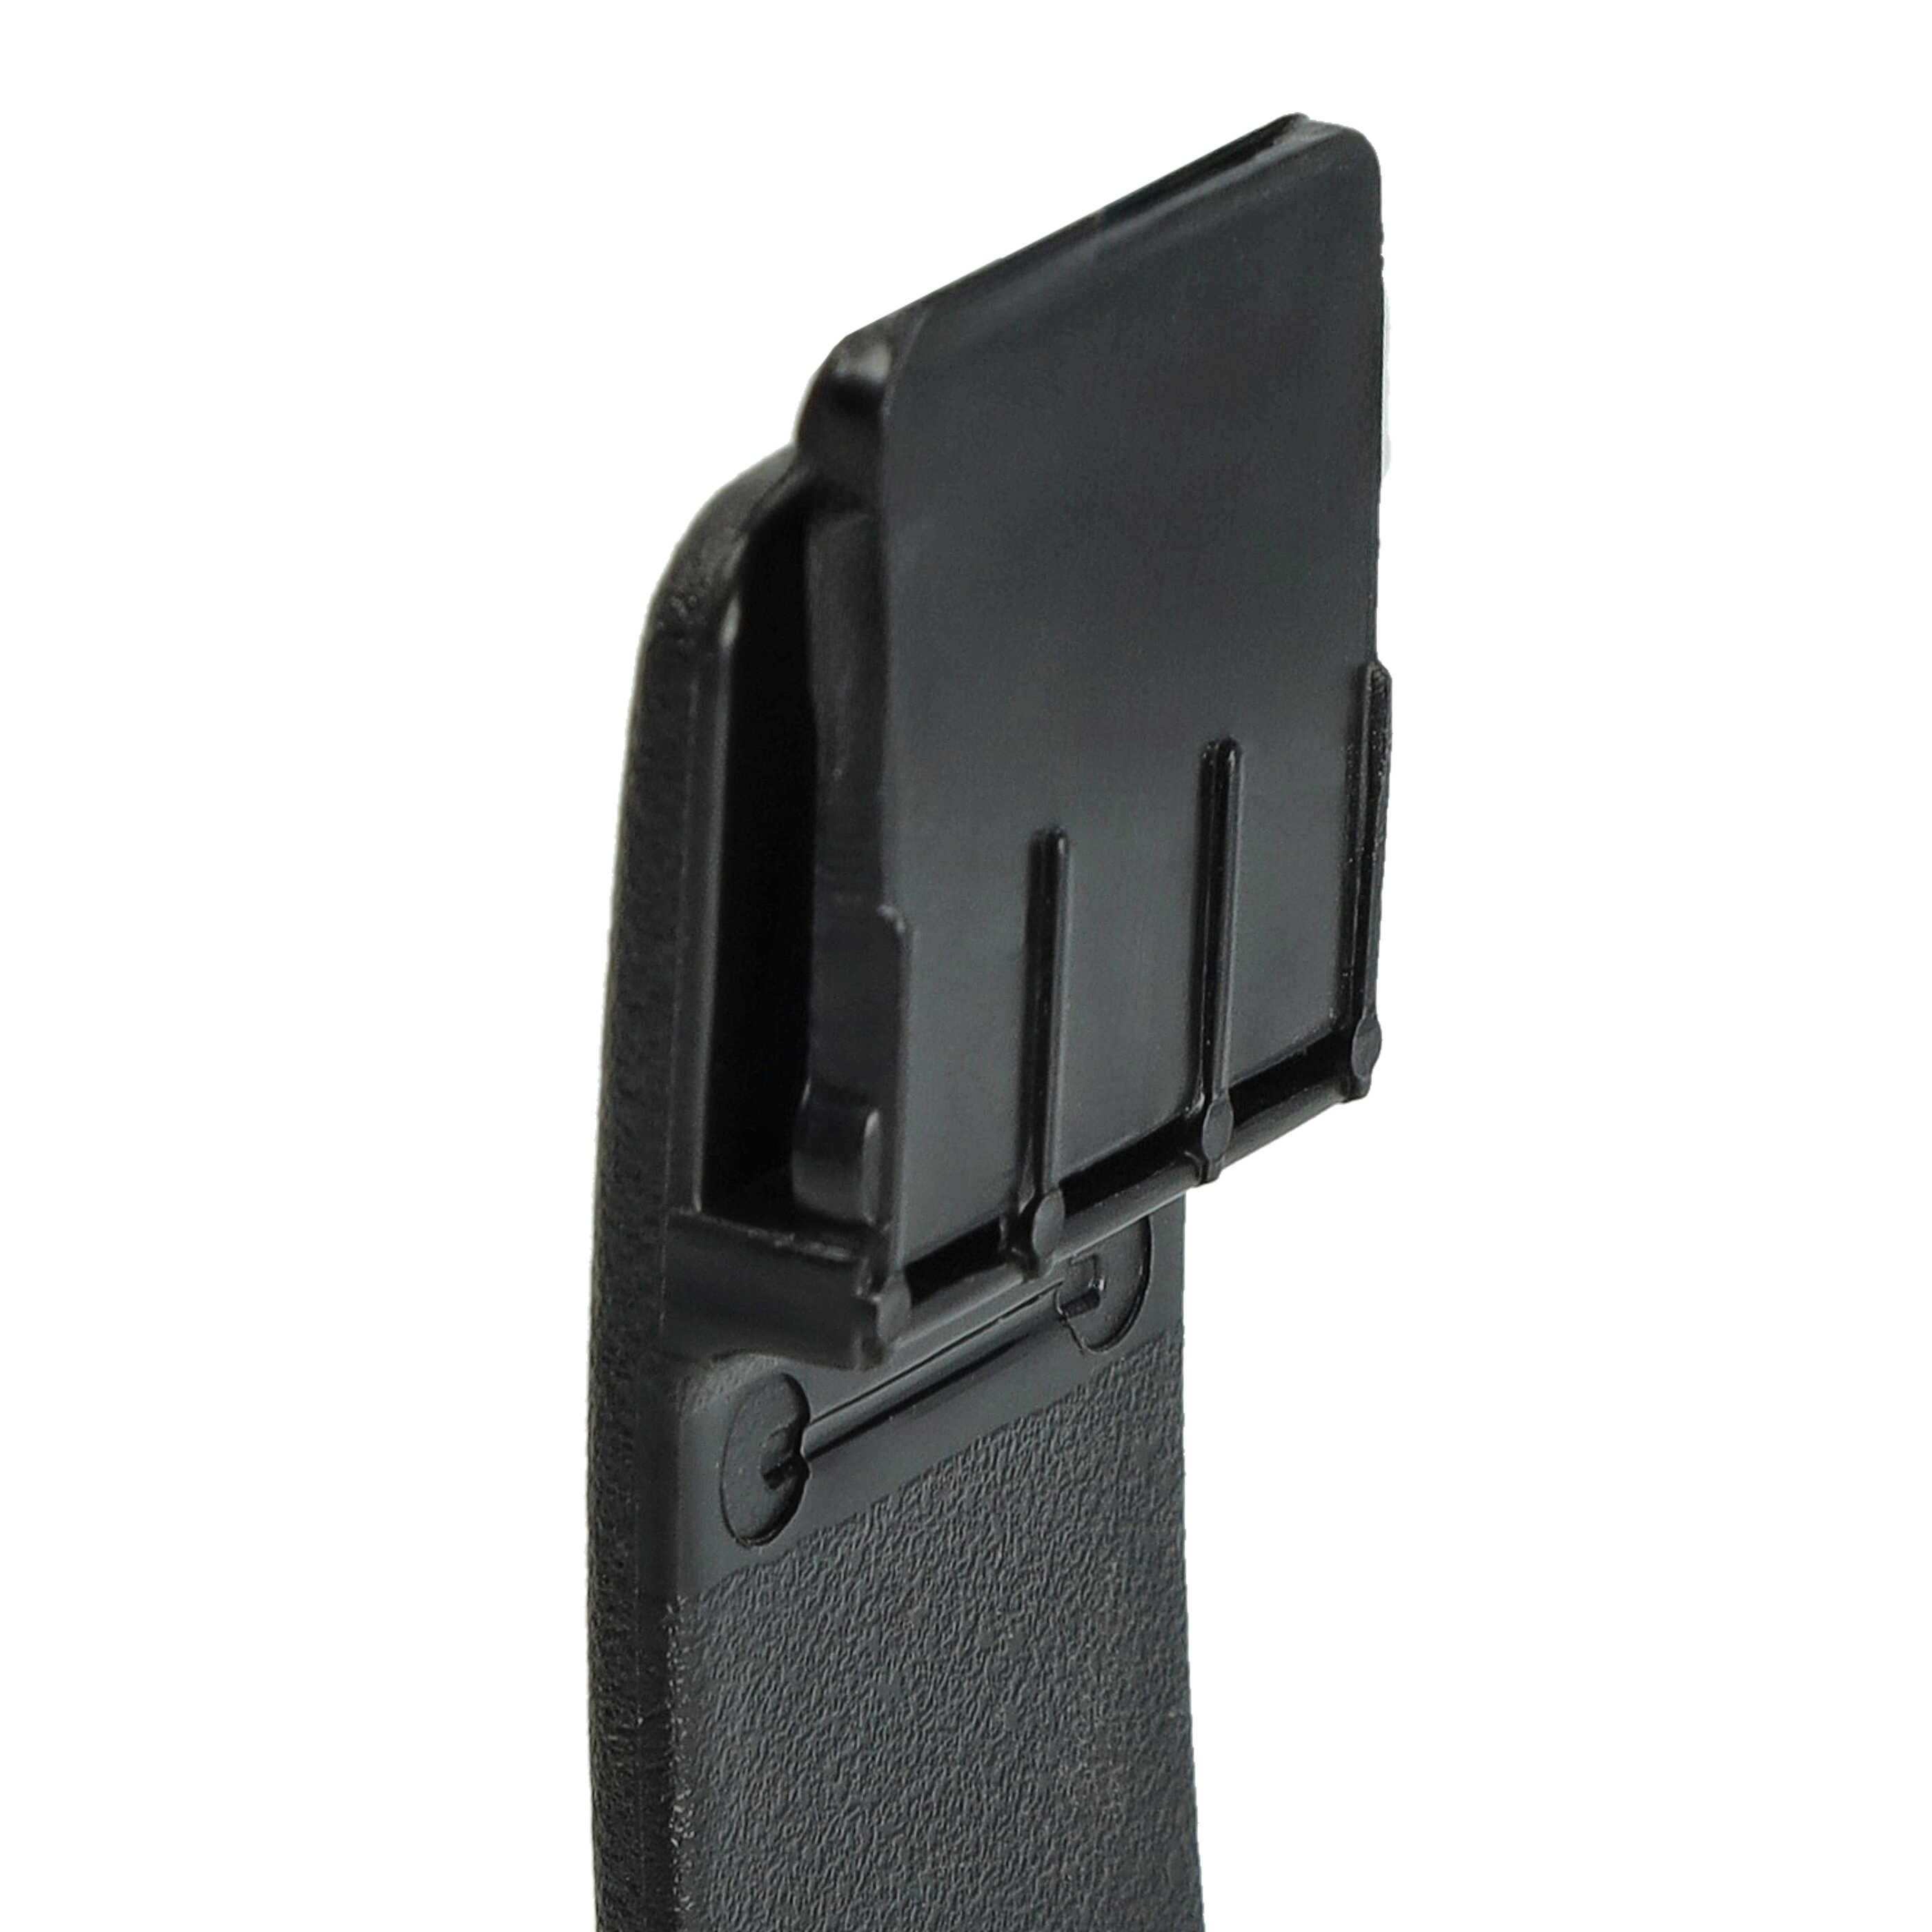 Gürtelclip für IC-F11 Icom Funkgerät - Kunststoff, Schwarz